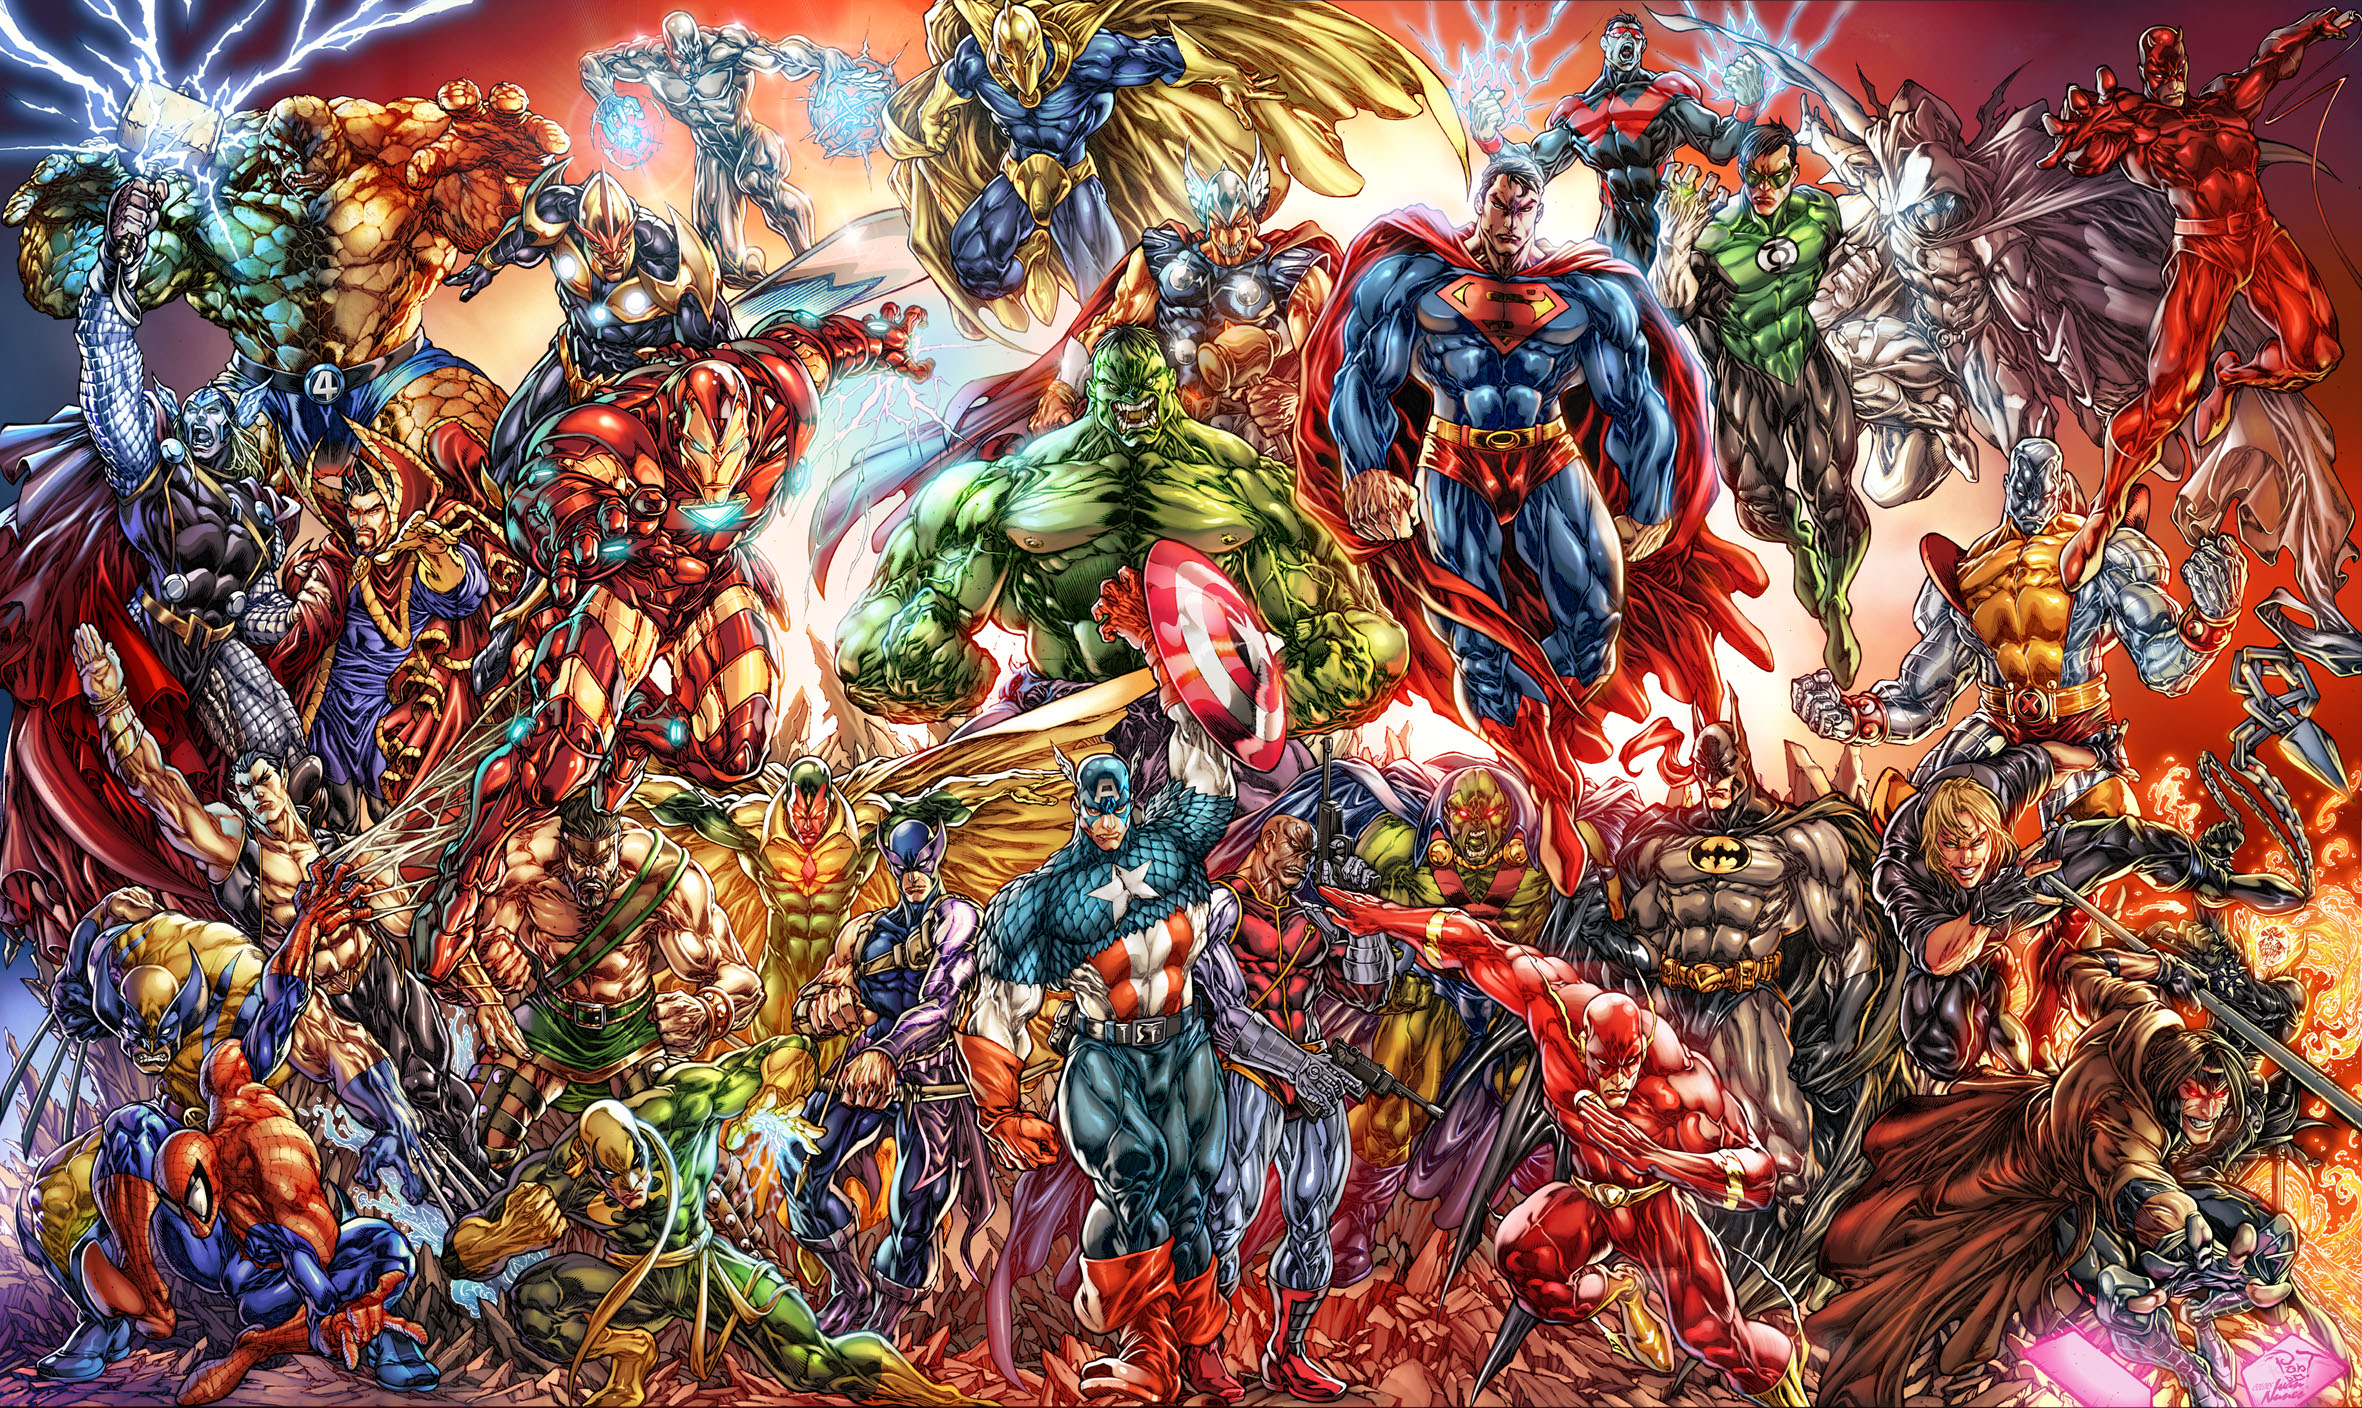 comics, superman, barry allen, dc comics, batman, wolverine, ghost rider, spider man, collage, ben grimm, beta ray bill, captain america, clint barton, colossus, danny rand, daredevil, deathlok, doctor fate (dc comics), doctor strange, flash, gambit (marvel comics), green lantern, hal jordan, hawkeye, hercules (marvel comics), hulk, iron fist (marvel comics), iron man, j'onn j'onzz, longshot (marvel comics), martian manhunter, moon knight, namor the sub mariner, nightwing, nova (marvel comics), peter parker, silver surfer, sub mariner, thing (marvel comics), thor, vision (marvel comics), wonder man images